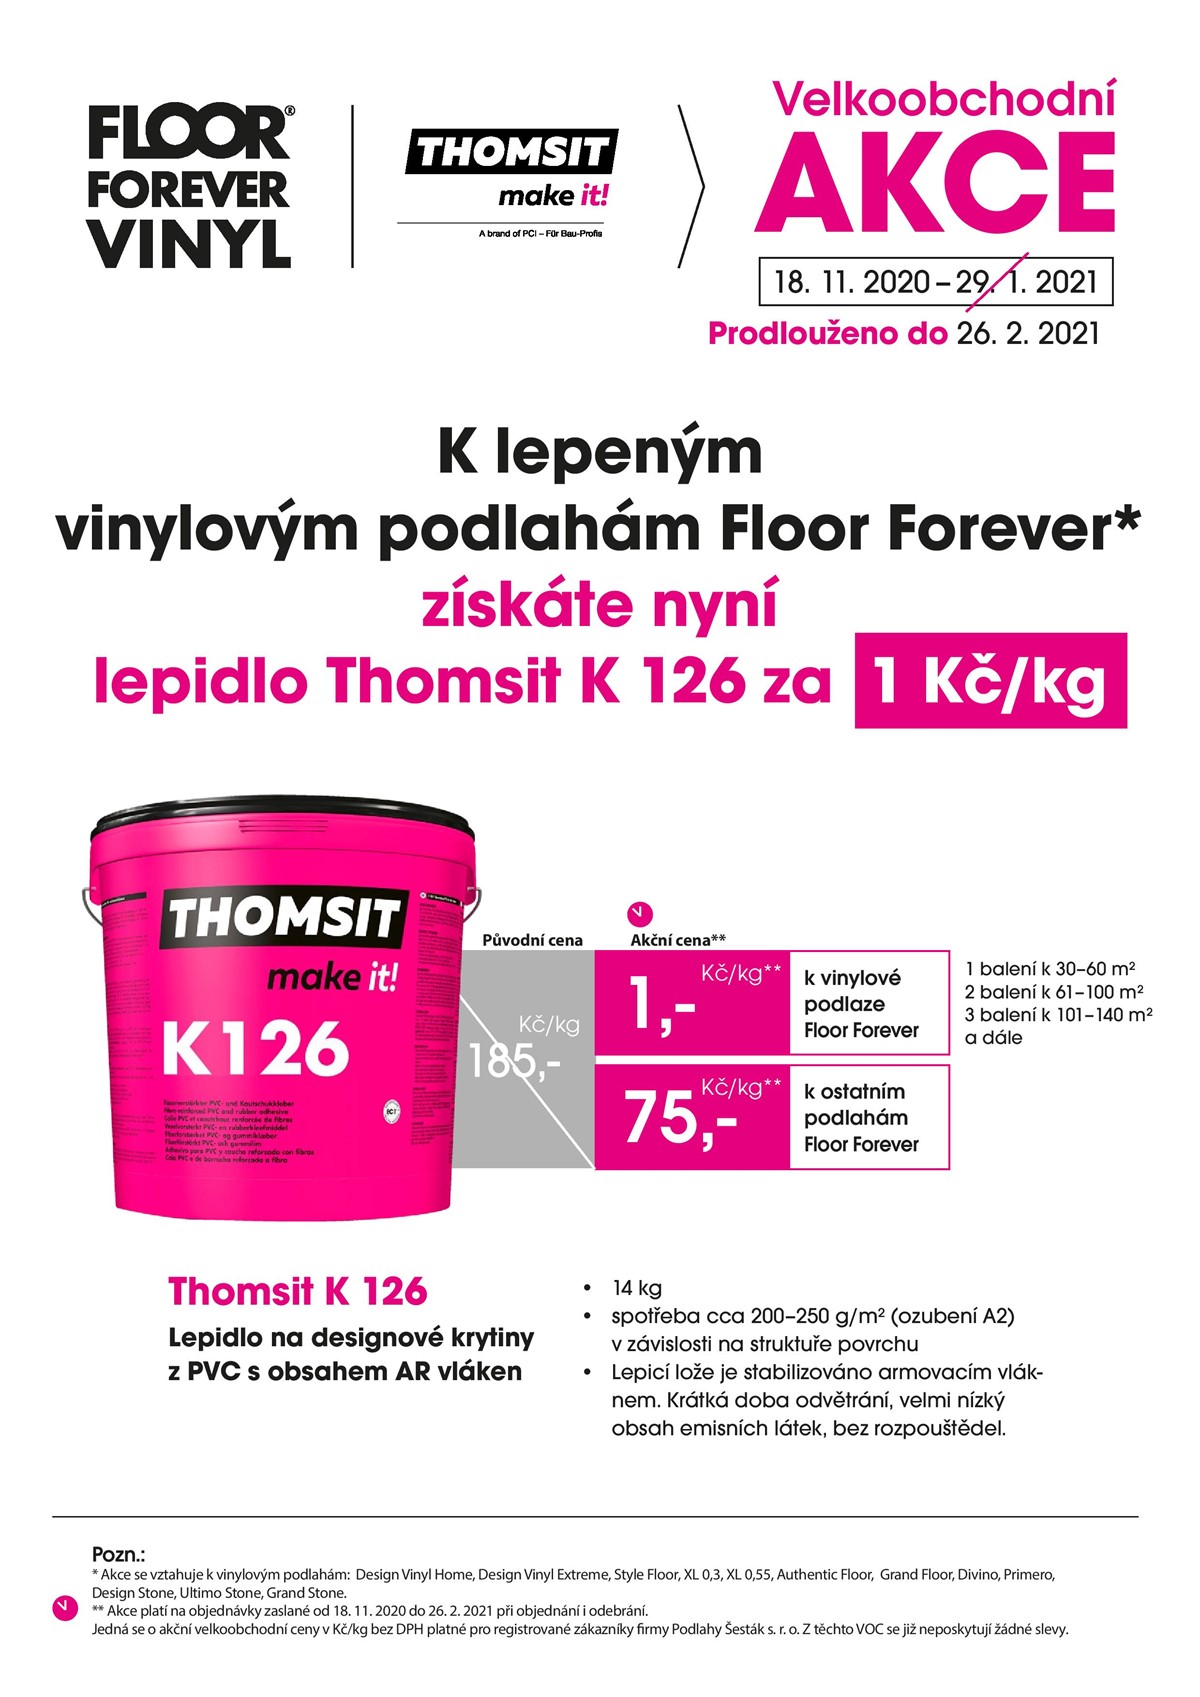 K lepené vinylové podlaze FLOOR FOREVER VINYL lepidlo Thomsit K126 za 1 Kč